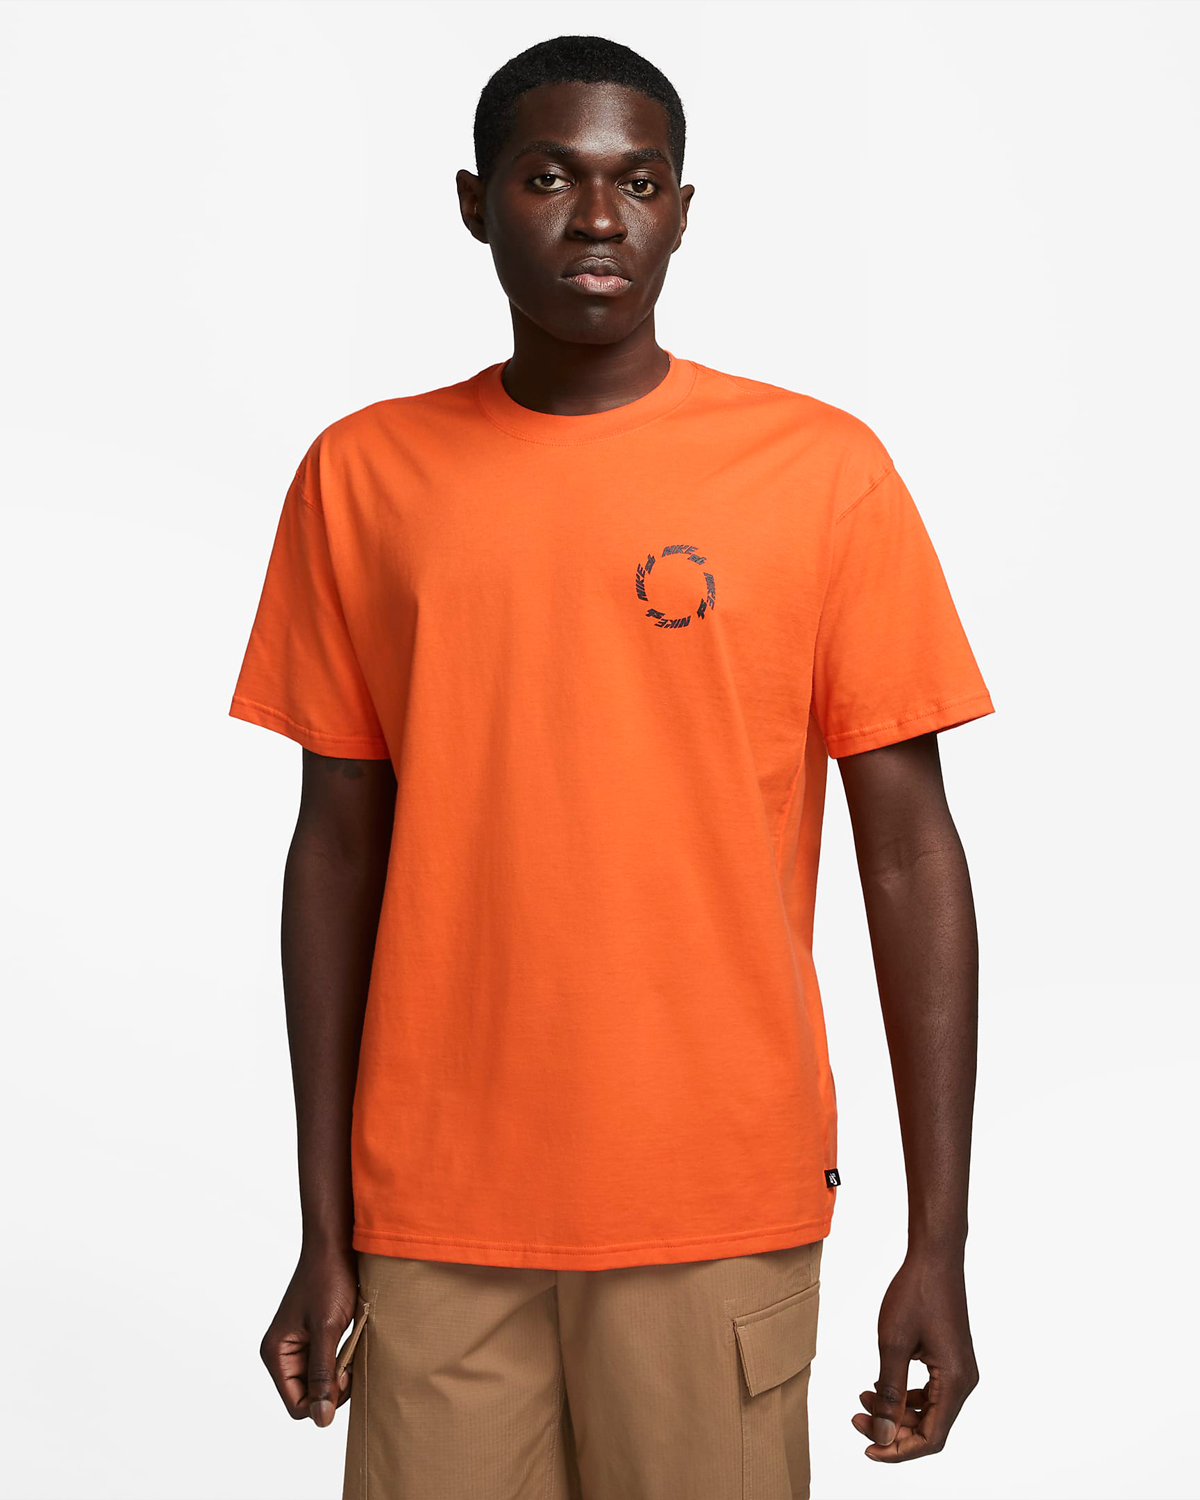 Nike-SB-T-Shirt-Safety-Orange-1